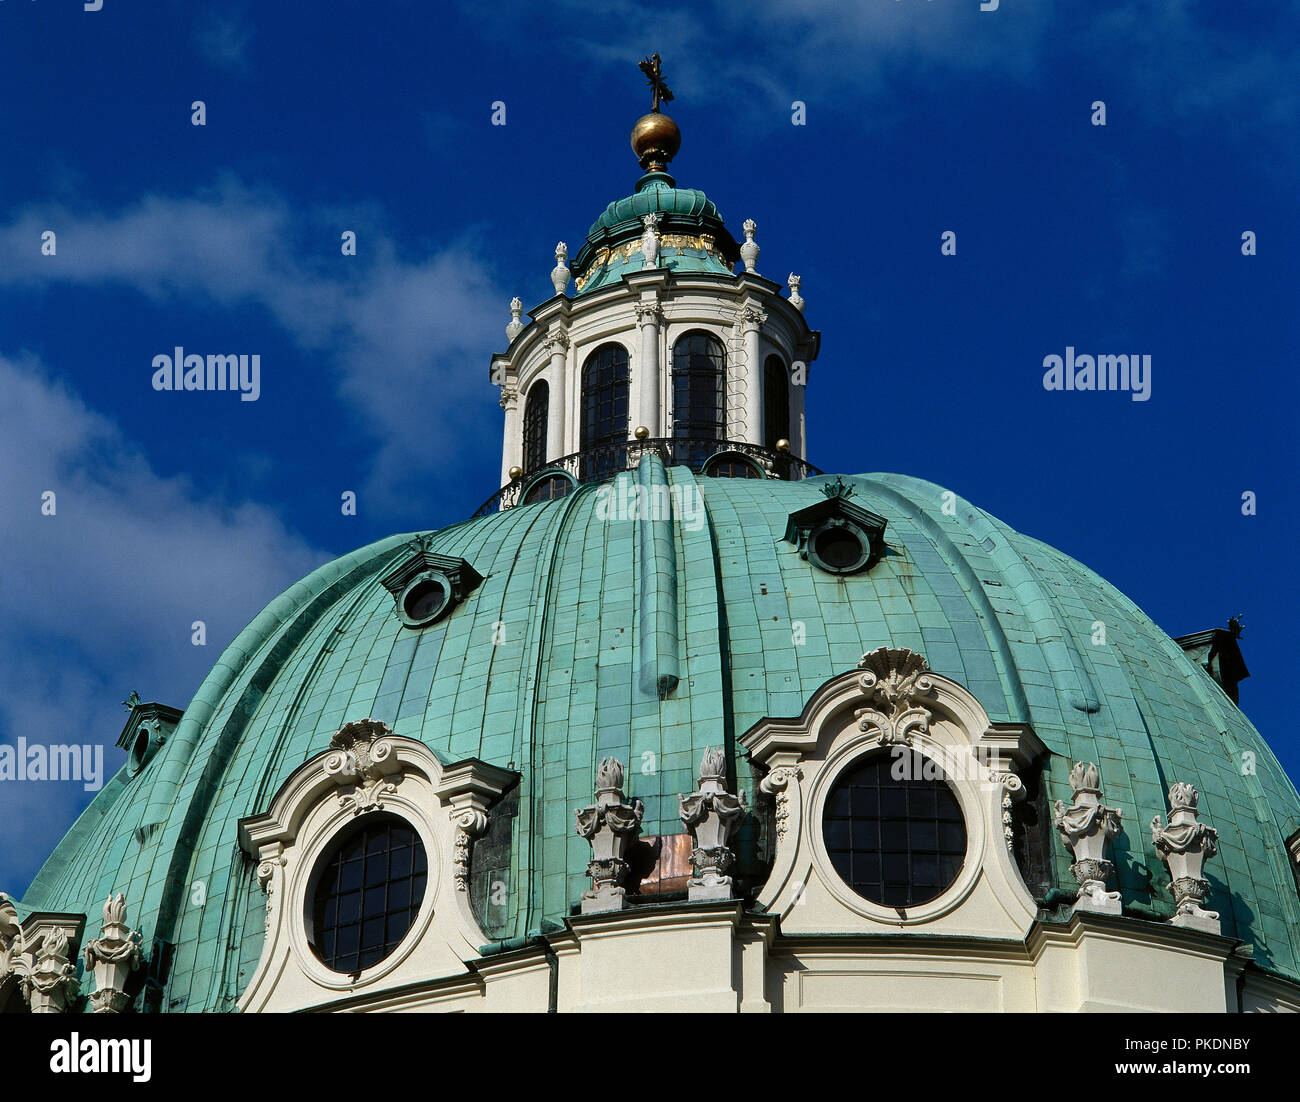 Johann Bernhard Fischer von Erlach (1656-1723). Karlskirche (St. Charles Church). Baroque style. 1716-1737. Dedicated to St. Charles Borromeo. Detail of the great dome crowned by a cross. Vienna. Austria. Stock Photo